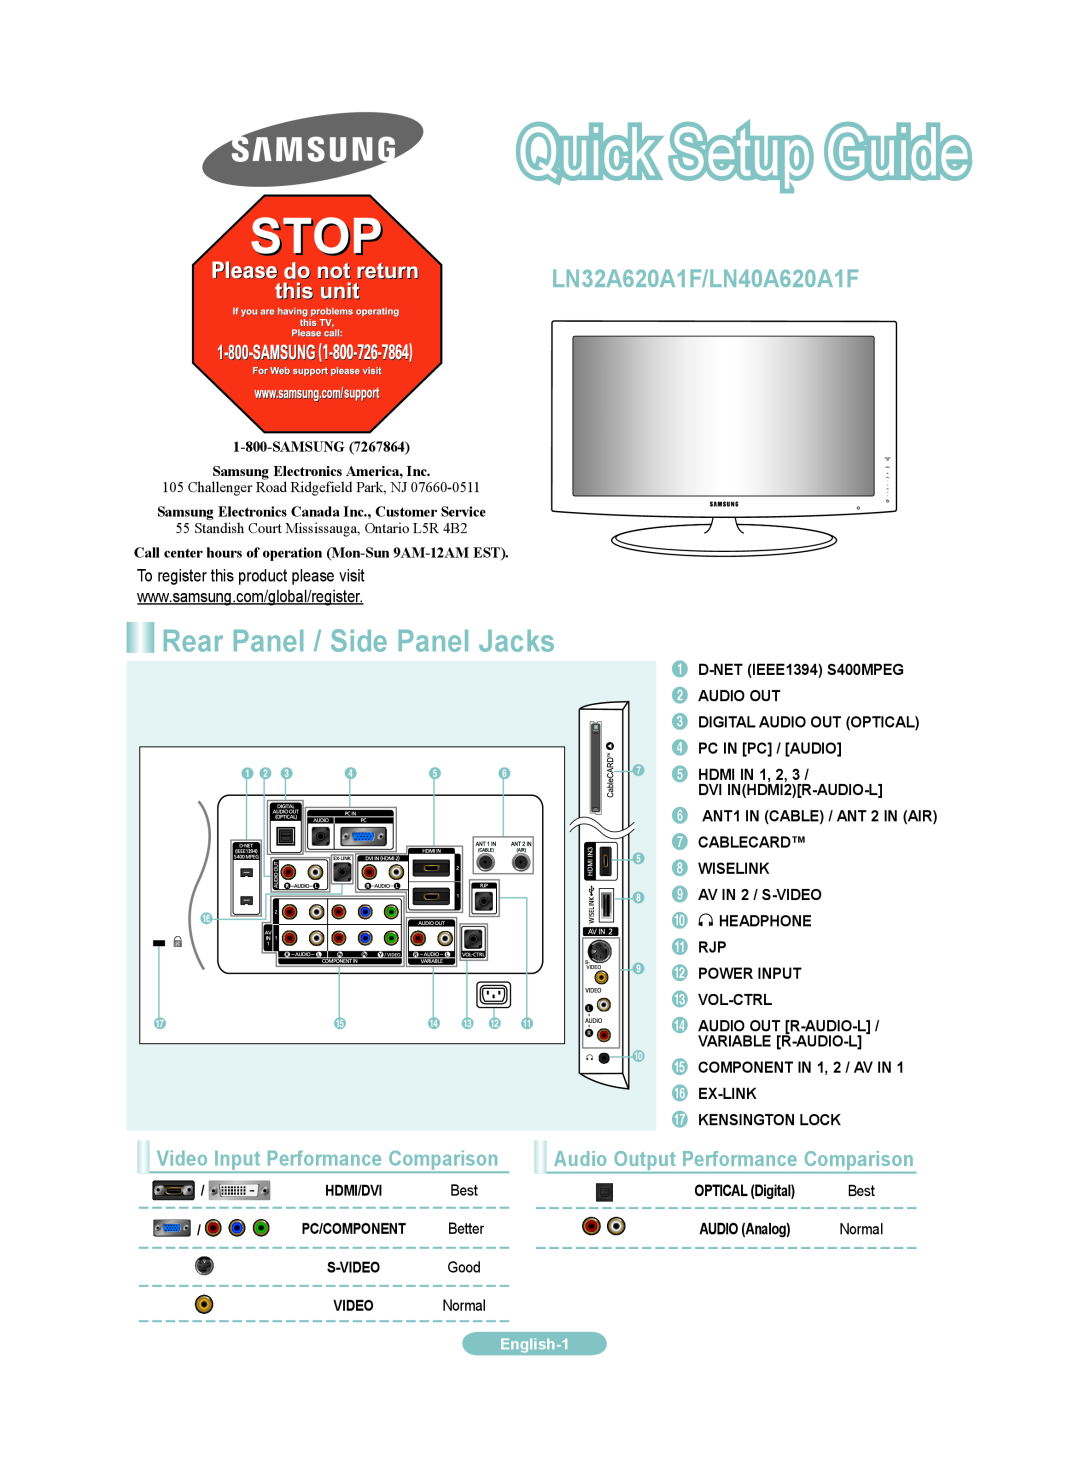 Samsung LN40A620AF setup guide Rear Panel / Side Panel Jacks, LN32A620A1F/LN40A620A1F, Video Input Performance Comparison 